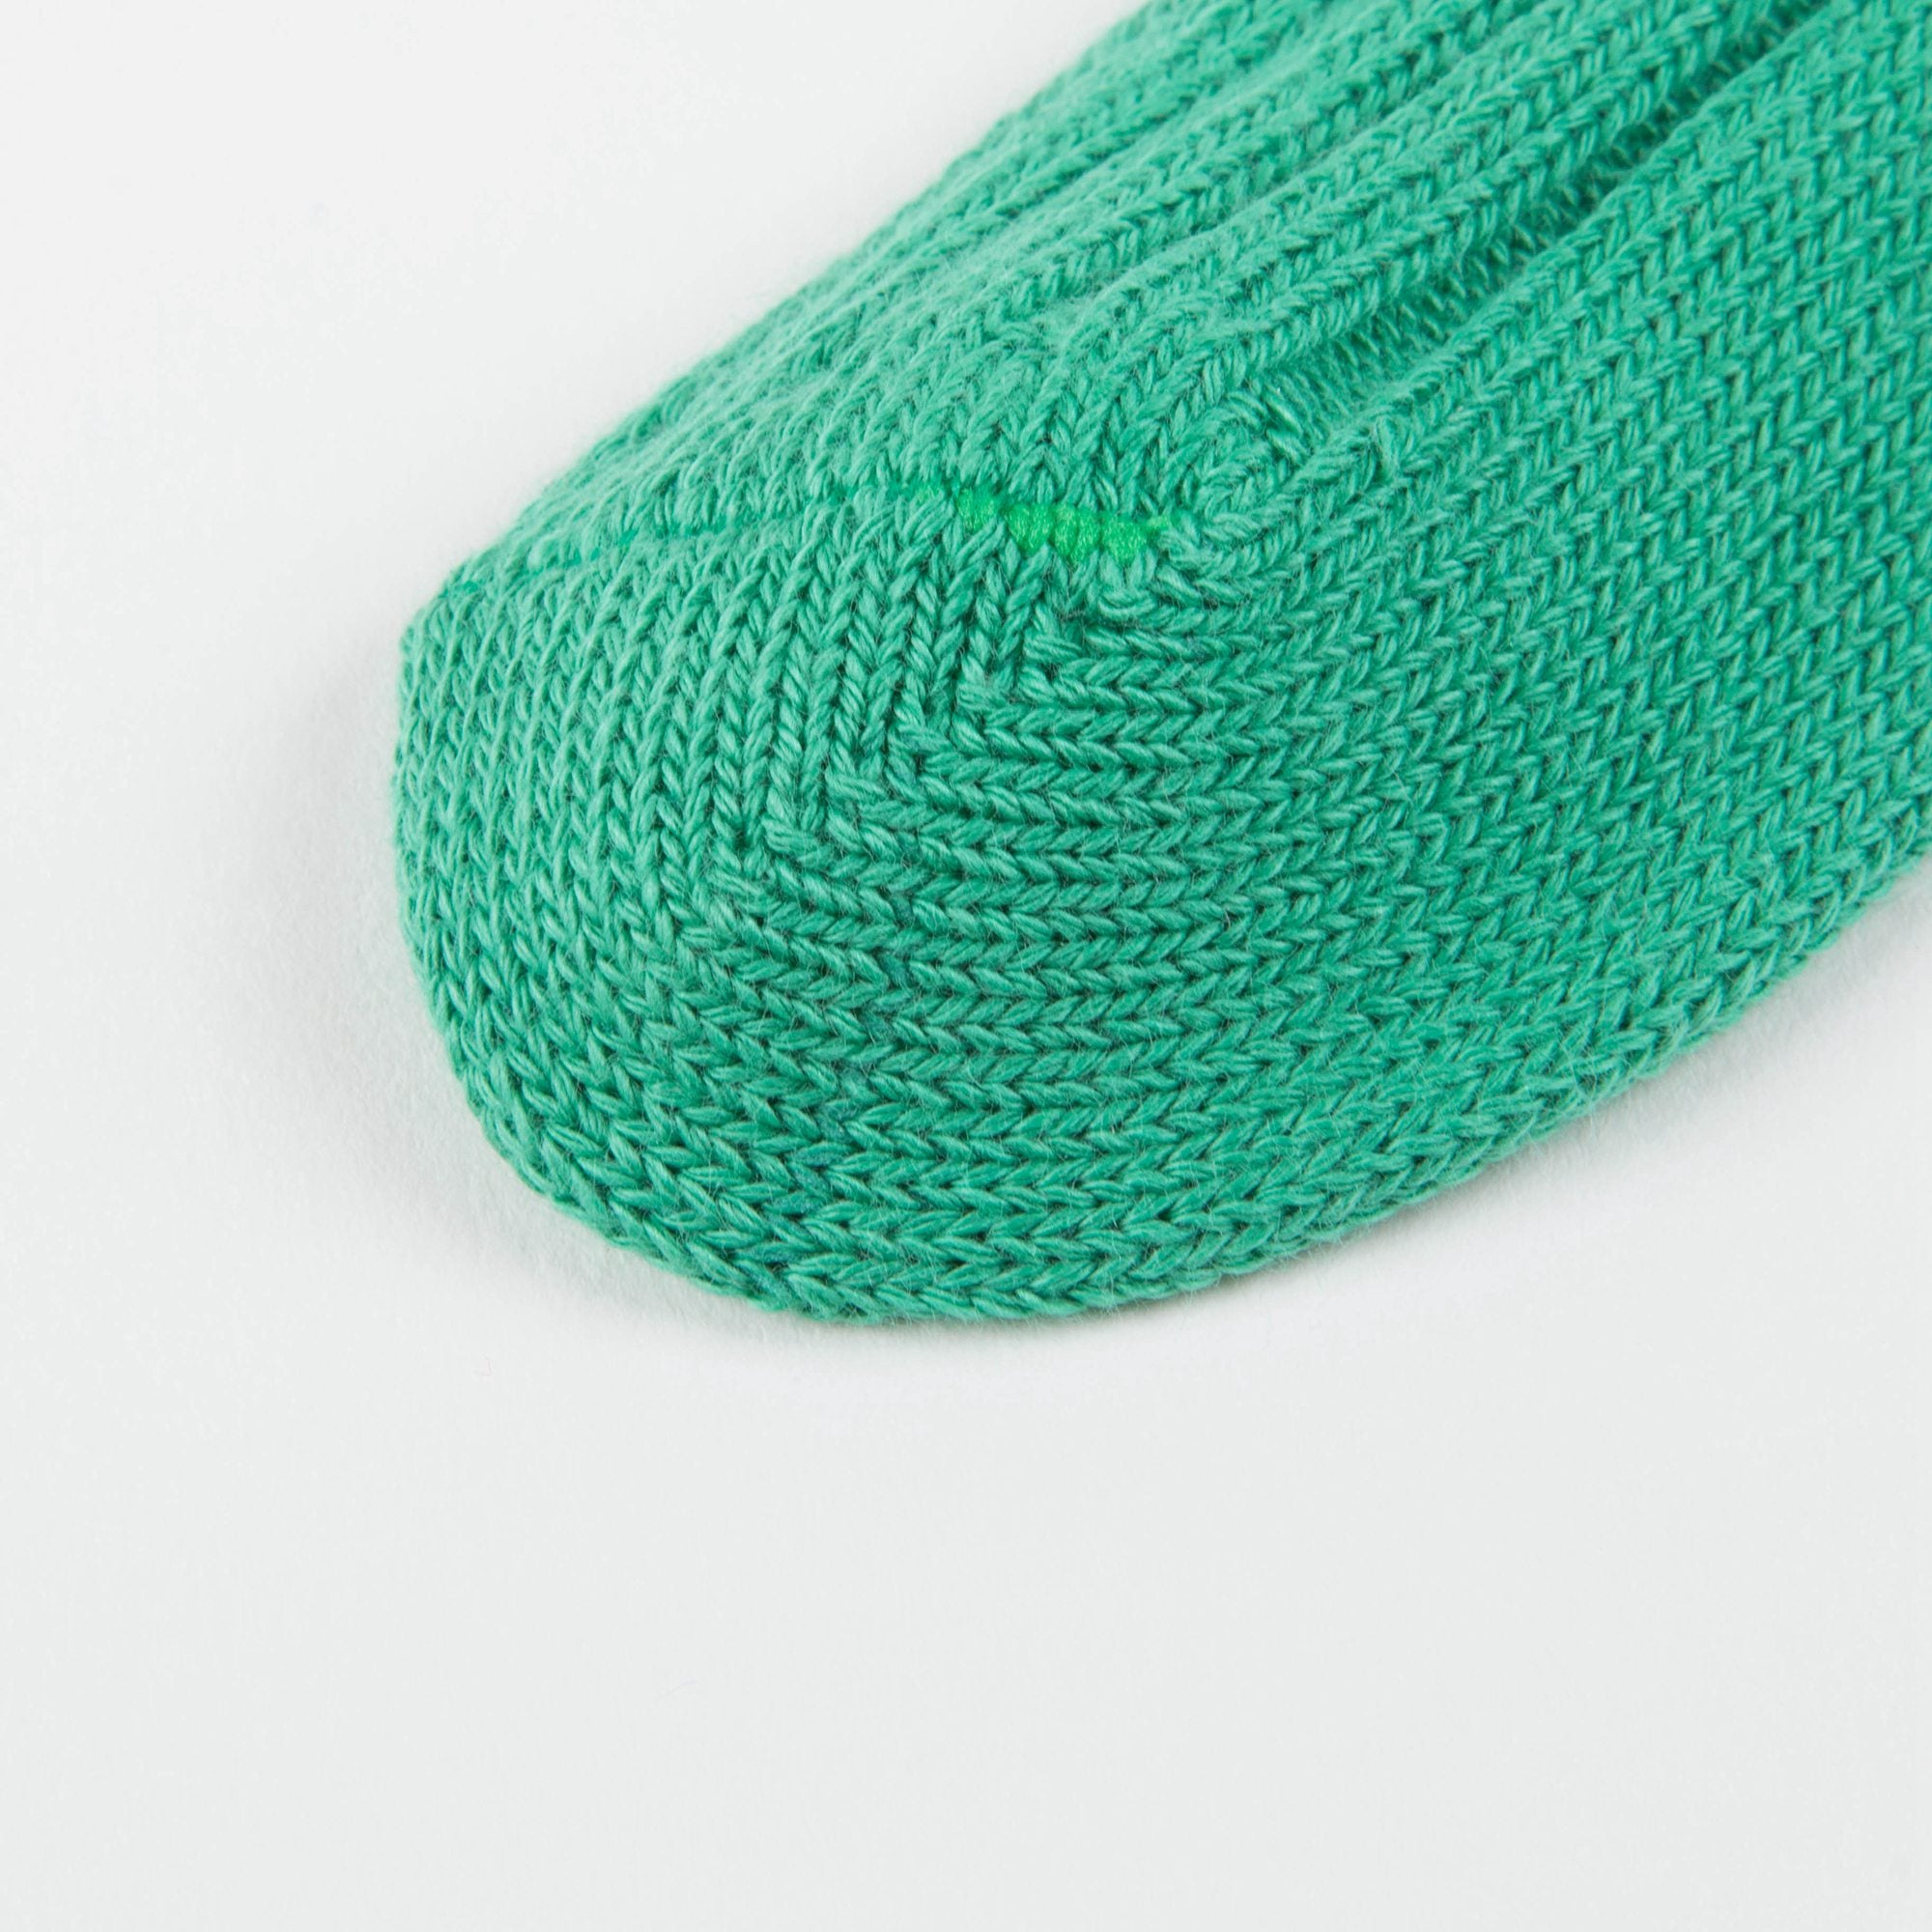 Baby Bright  Green Cotton Knitwear Socks